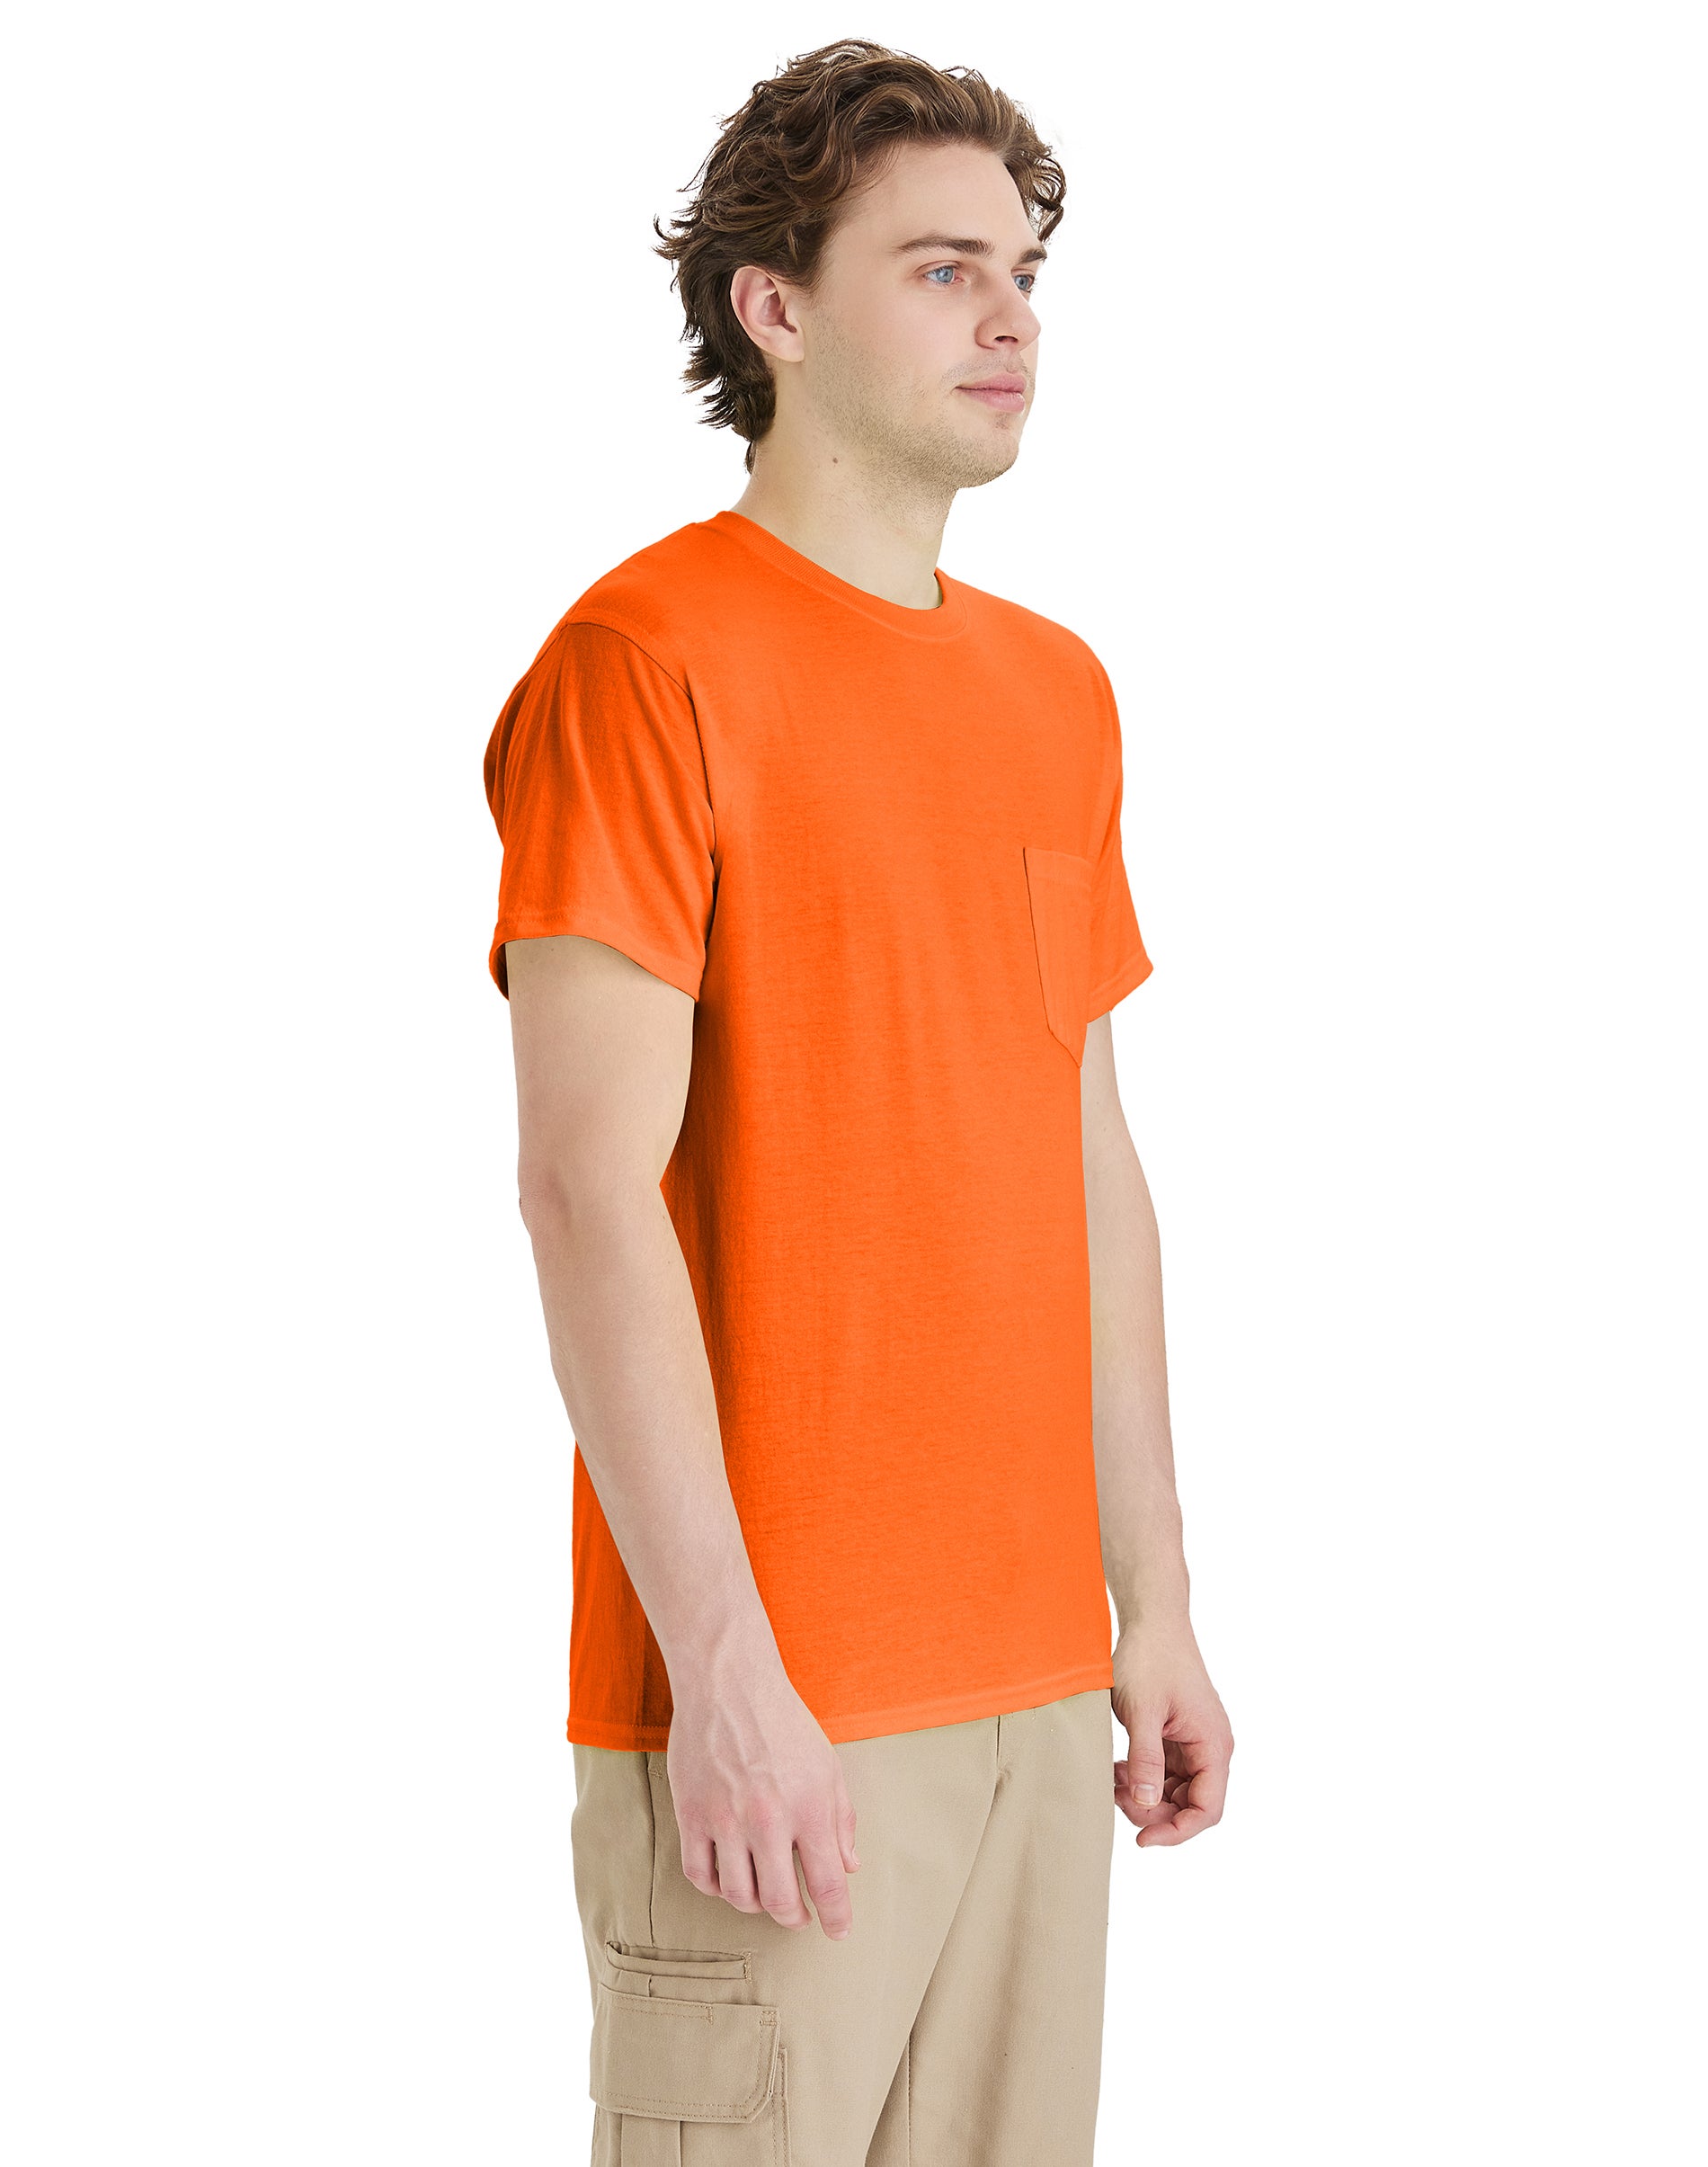 Hanes Workwear X-Temp Men's Pocket T-Shirt, 2-Pack Safety Orange M - image 4 of 5